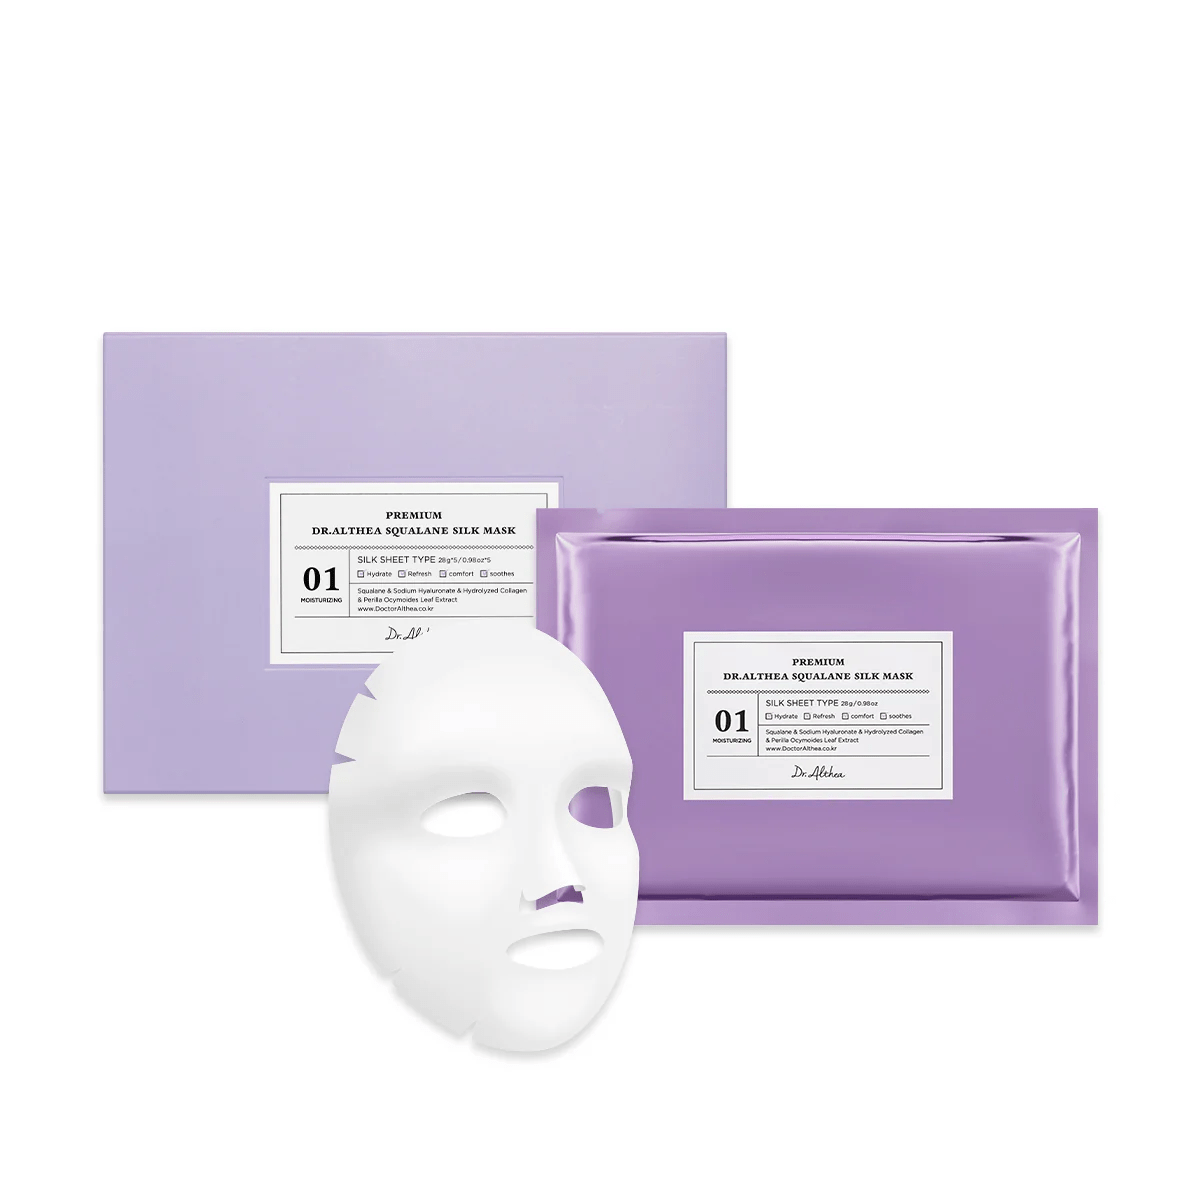 skincare-kbeauty-glowtime-dr althea premium squalane silk mask